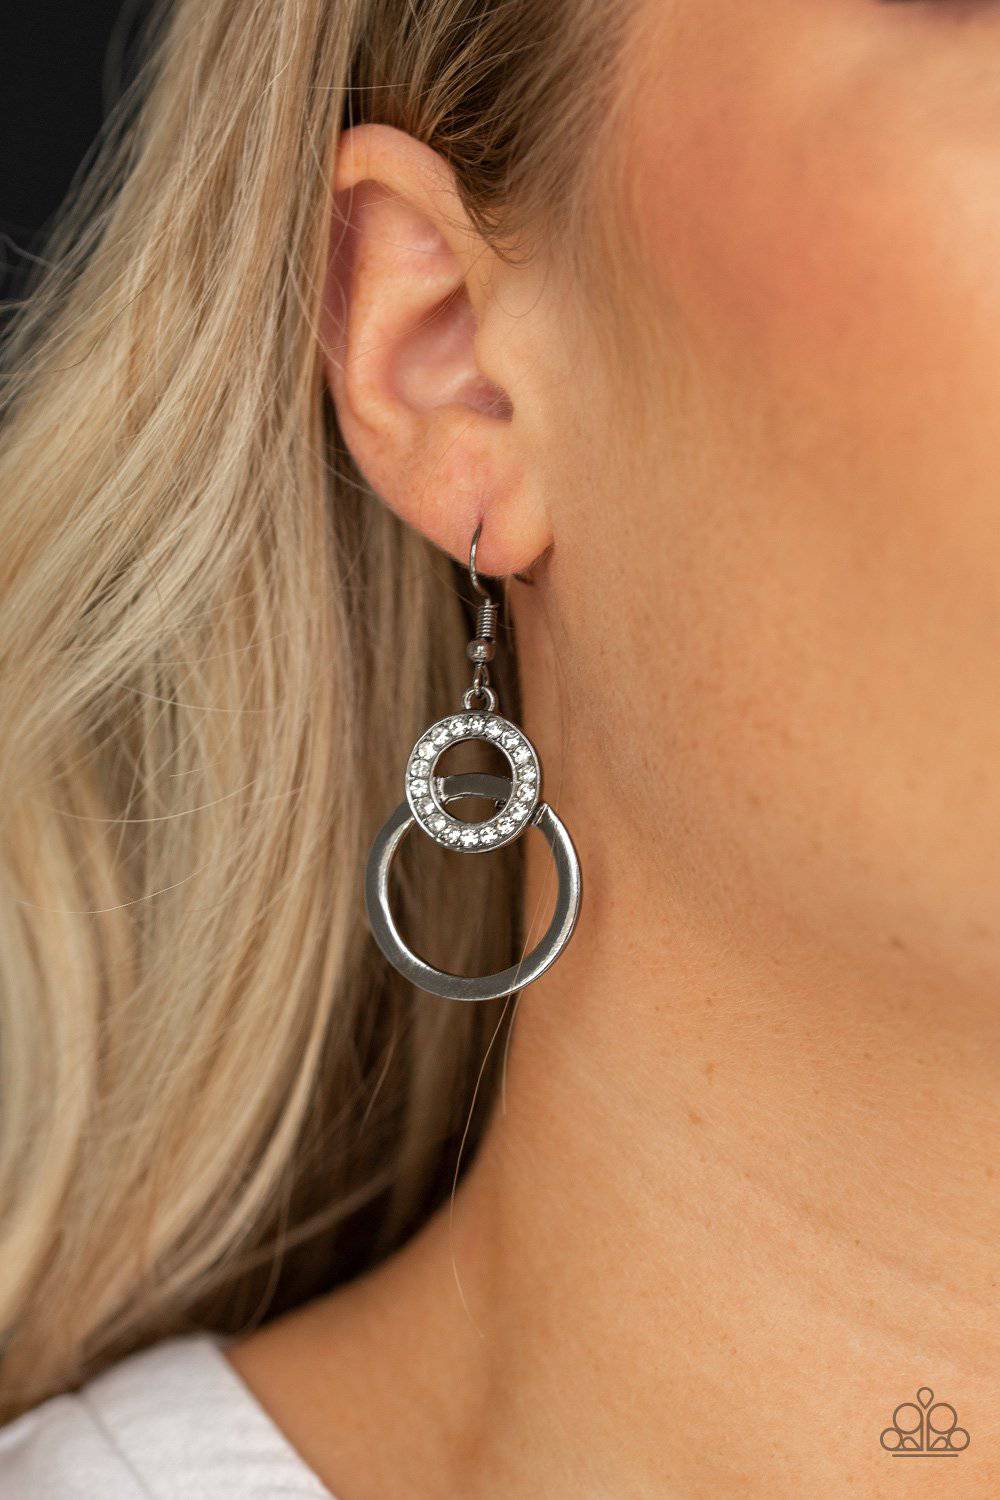 Regal Refinery - Black and White Rhinestone Earrings - Paparazzi Accessories - GlaMarous Titi Jewels